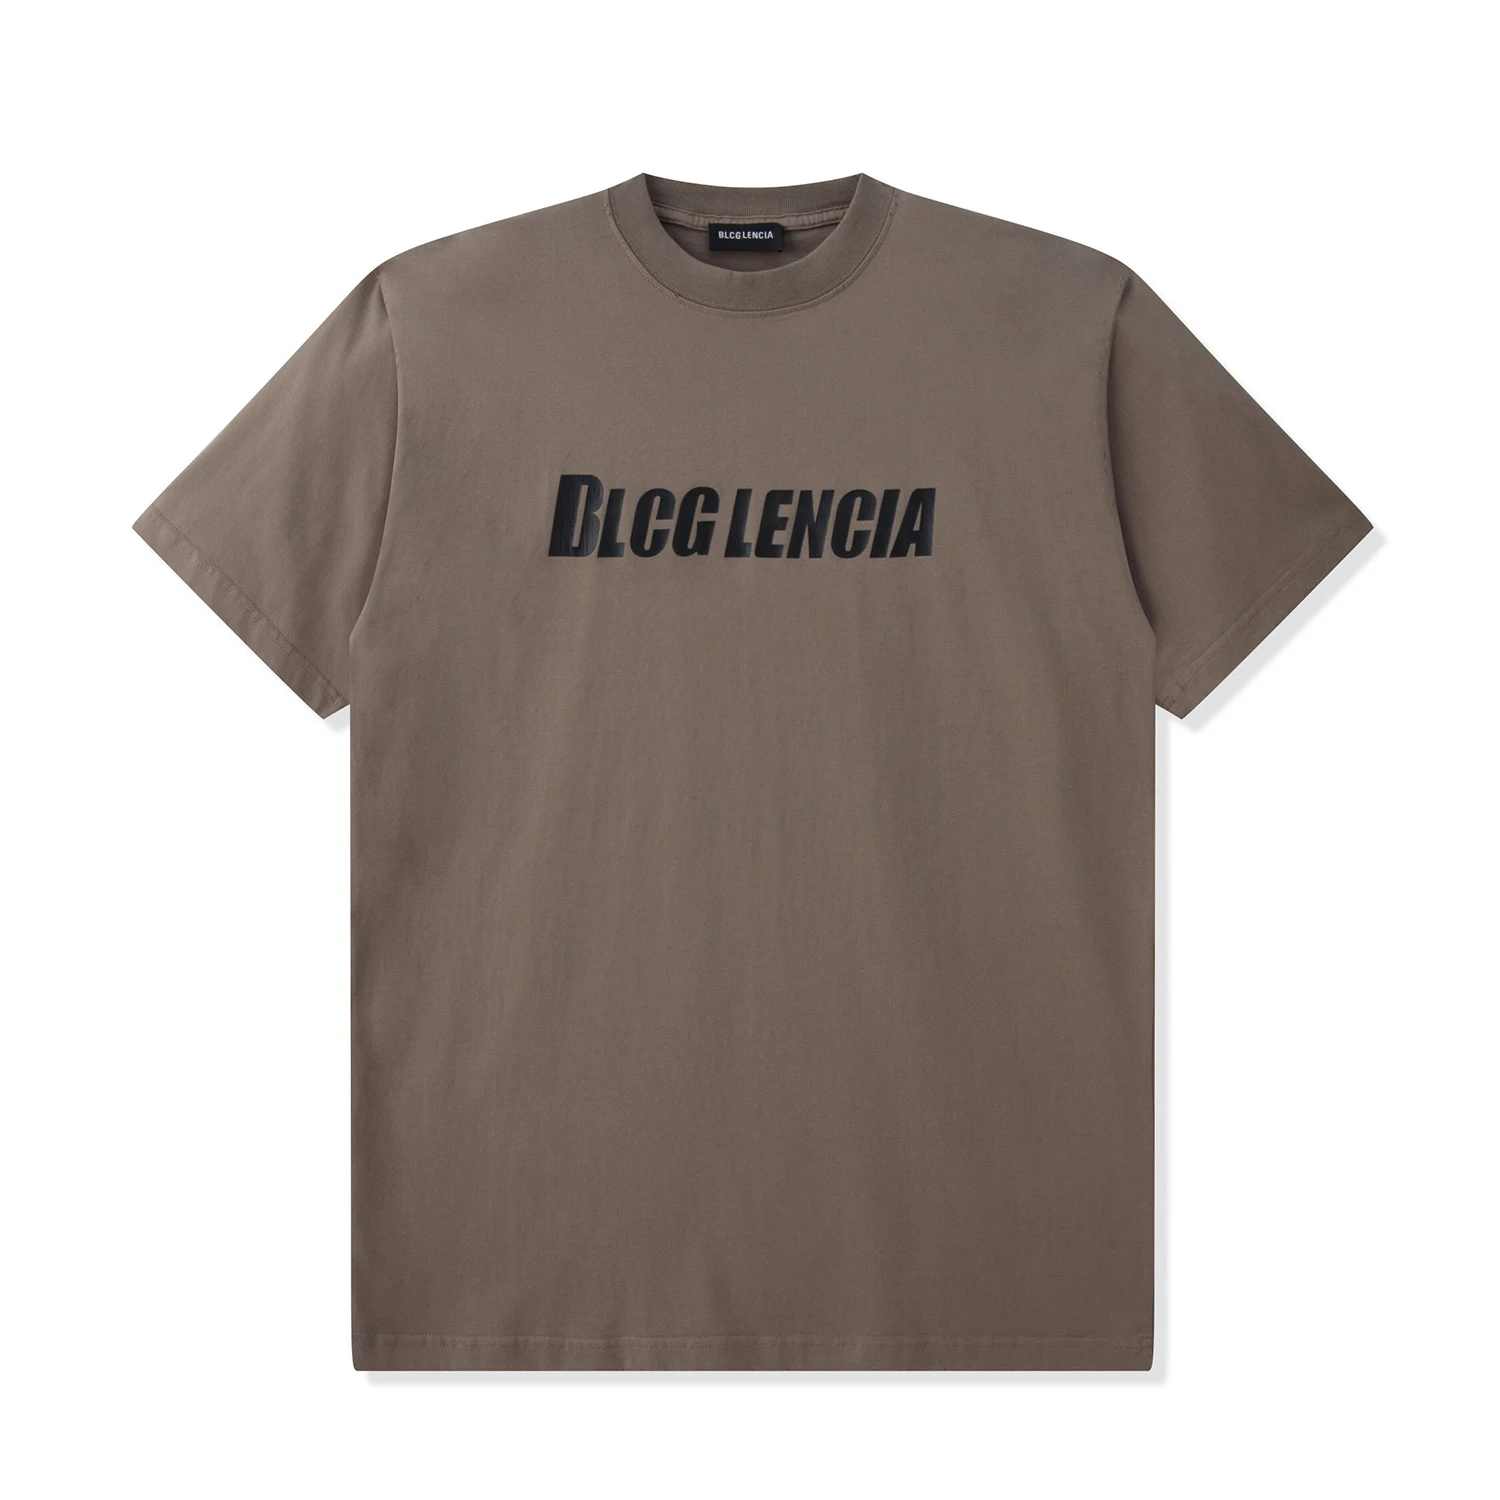 

BLCG LENCIA Mens Summer Oversize 100% Cotton Fabric Letter Print T-shirt Unisex Washed Vintage Tops BL110